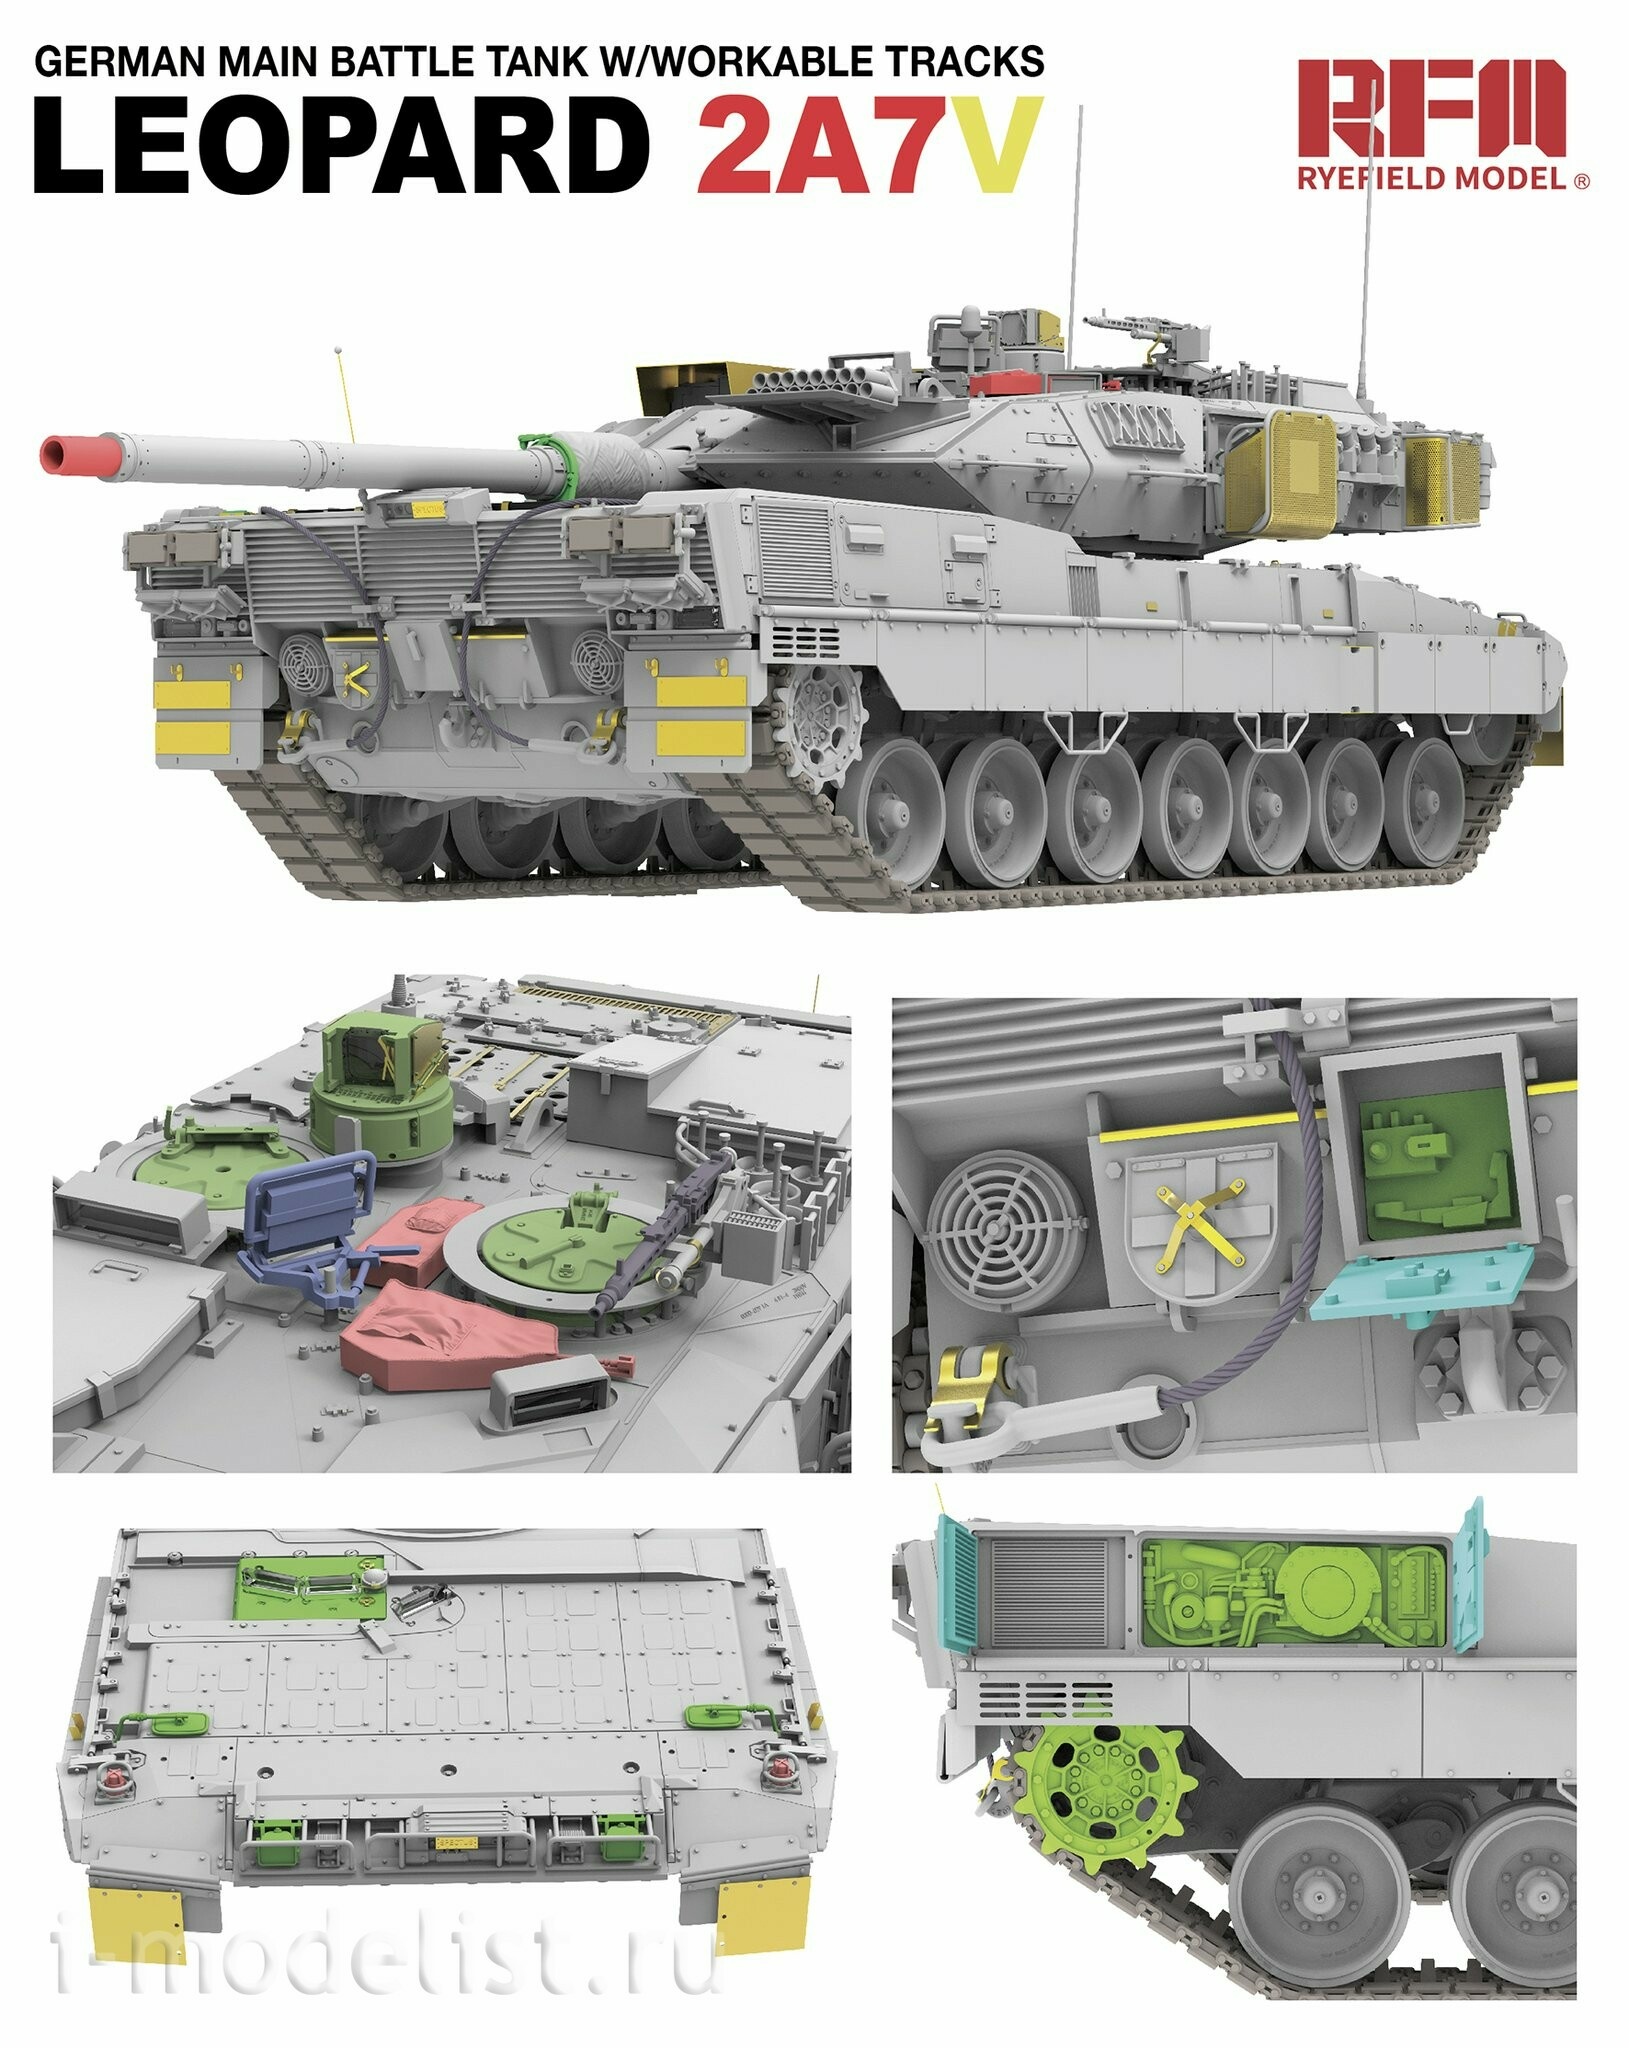 RM-5109 Rye Field Model 1/35 Notмецкий танк Leopard 2A7V